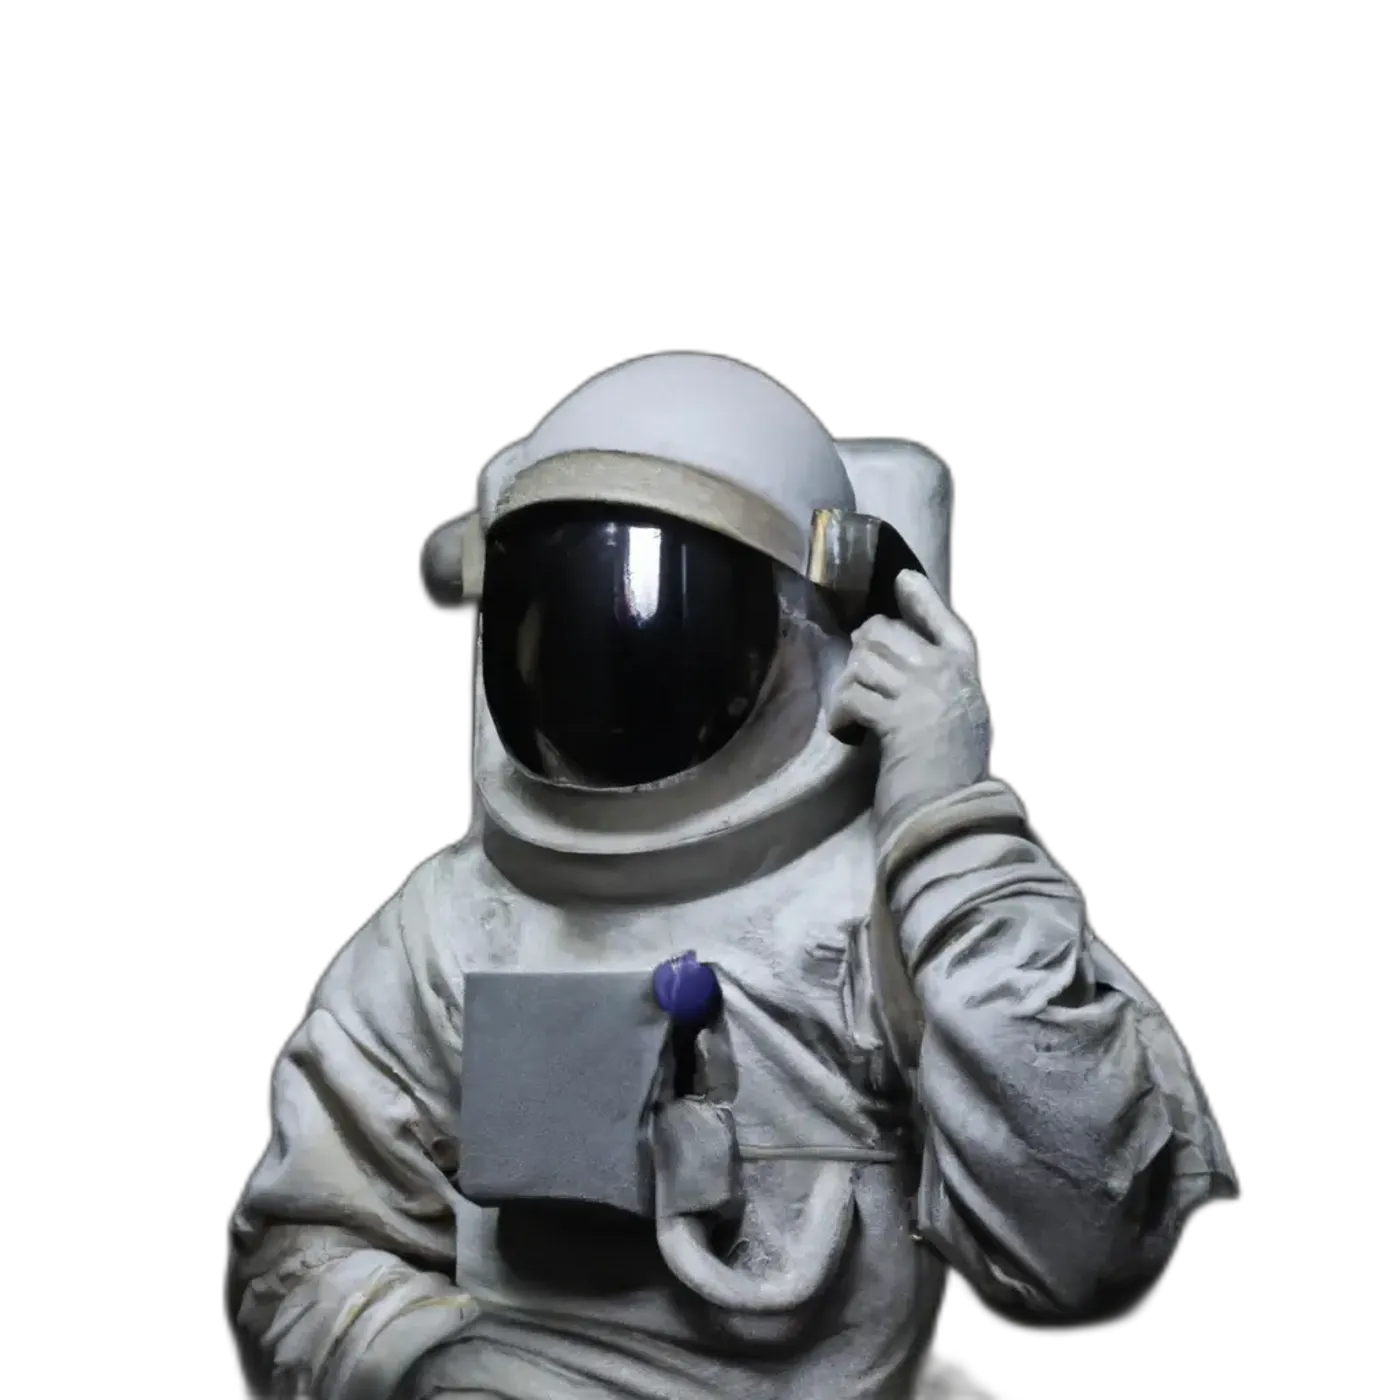 An astronaut is on phone